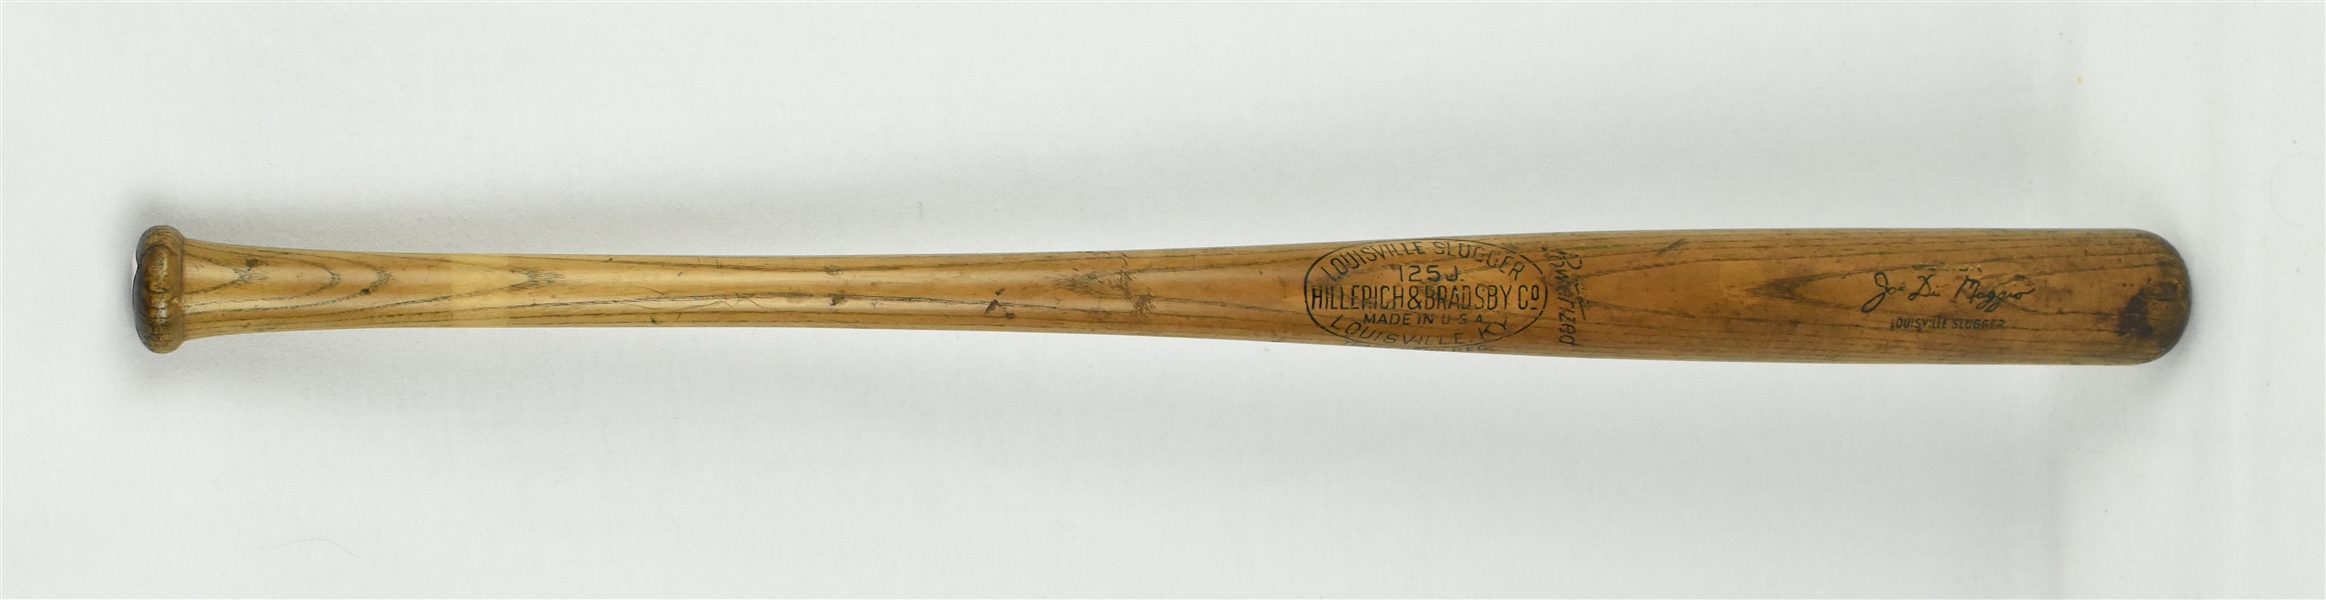 Joe DiMaggio 1934-1949 Louisville Slugger Baseball Bat